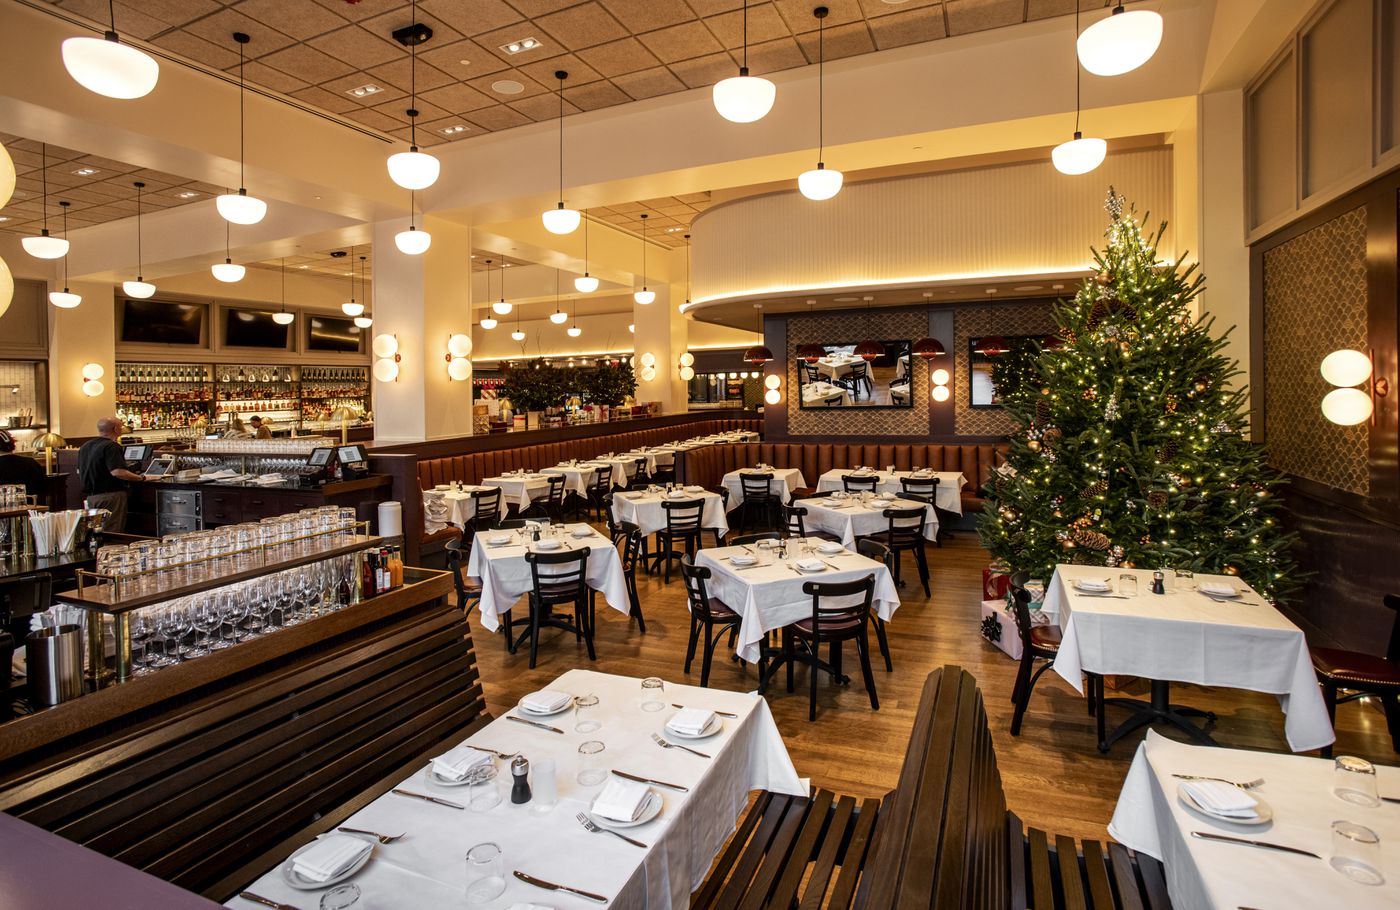 New York City’s Blue Ribbon Brasserie Makes Its Boston Debut